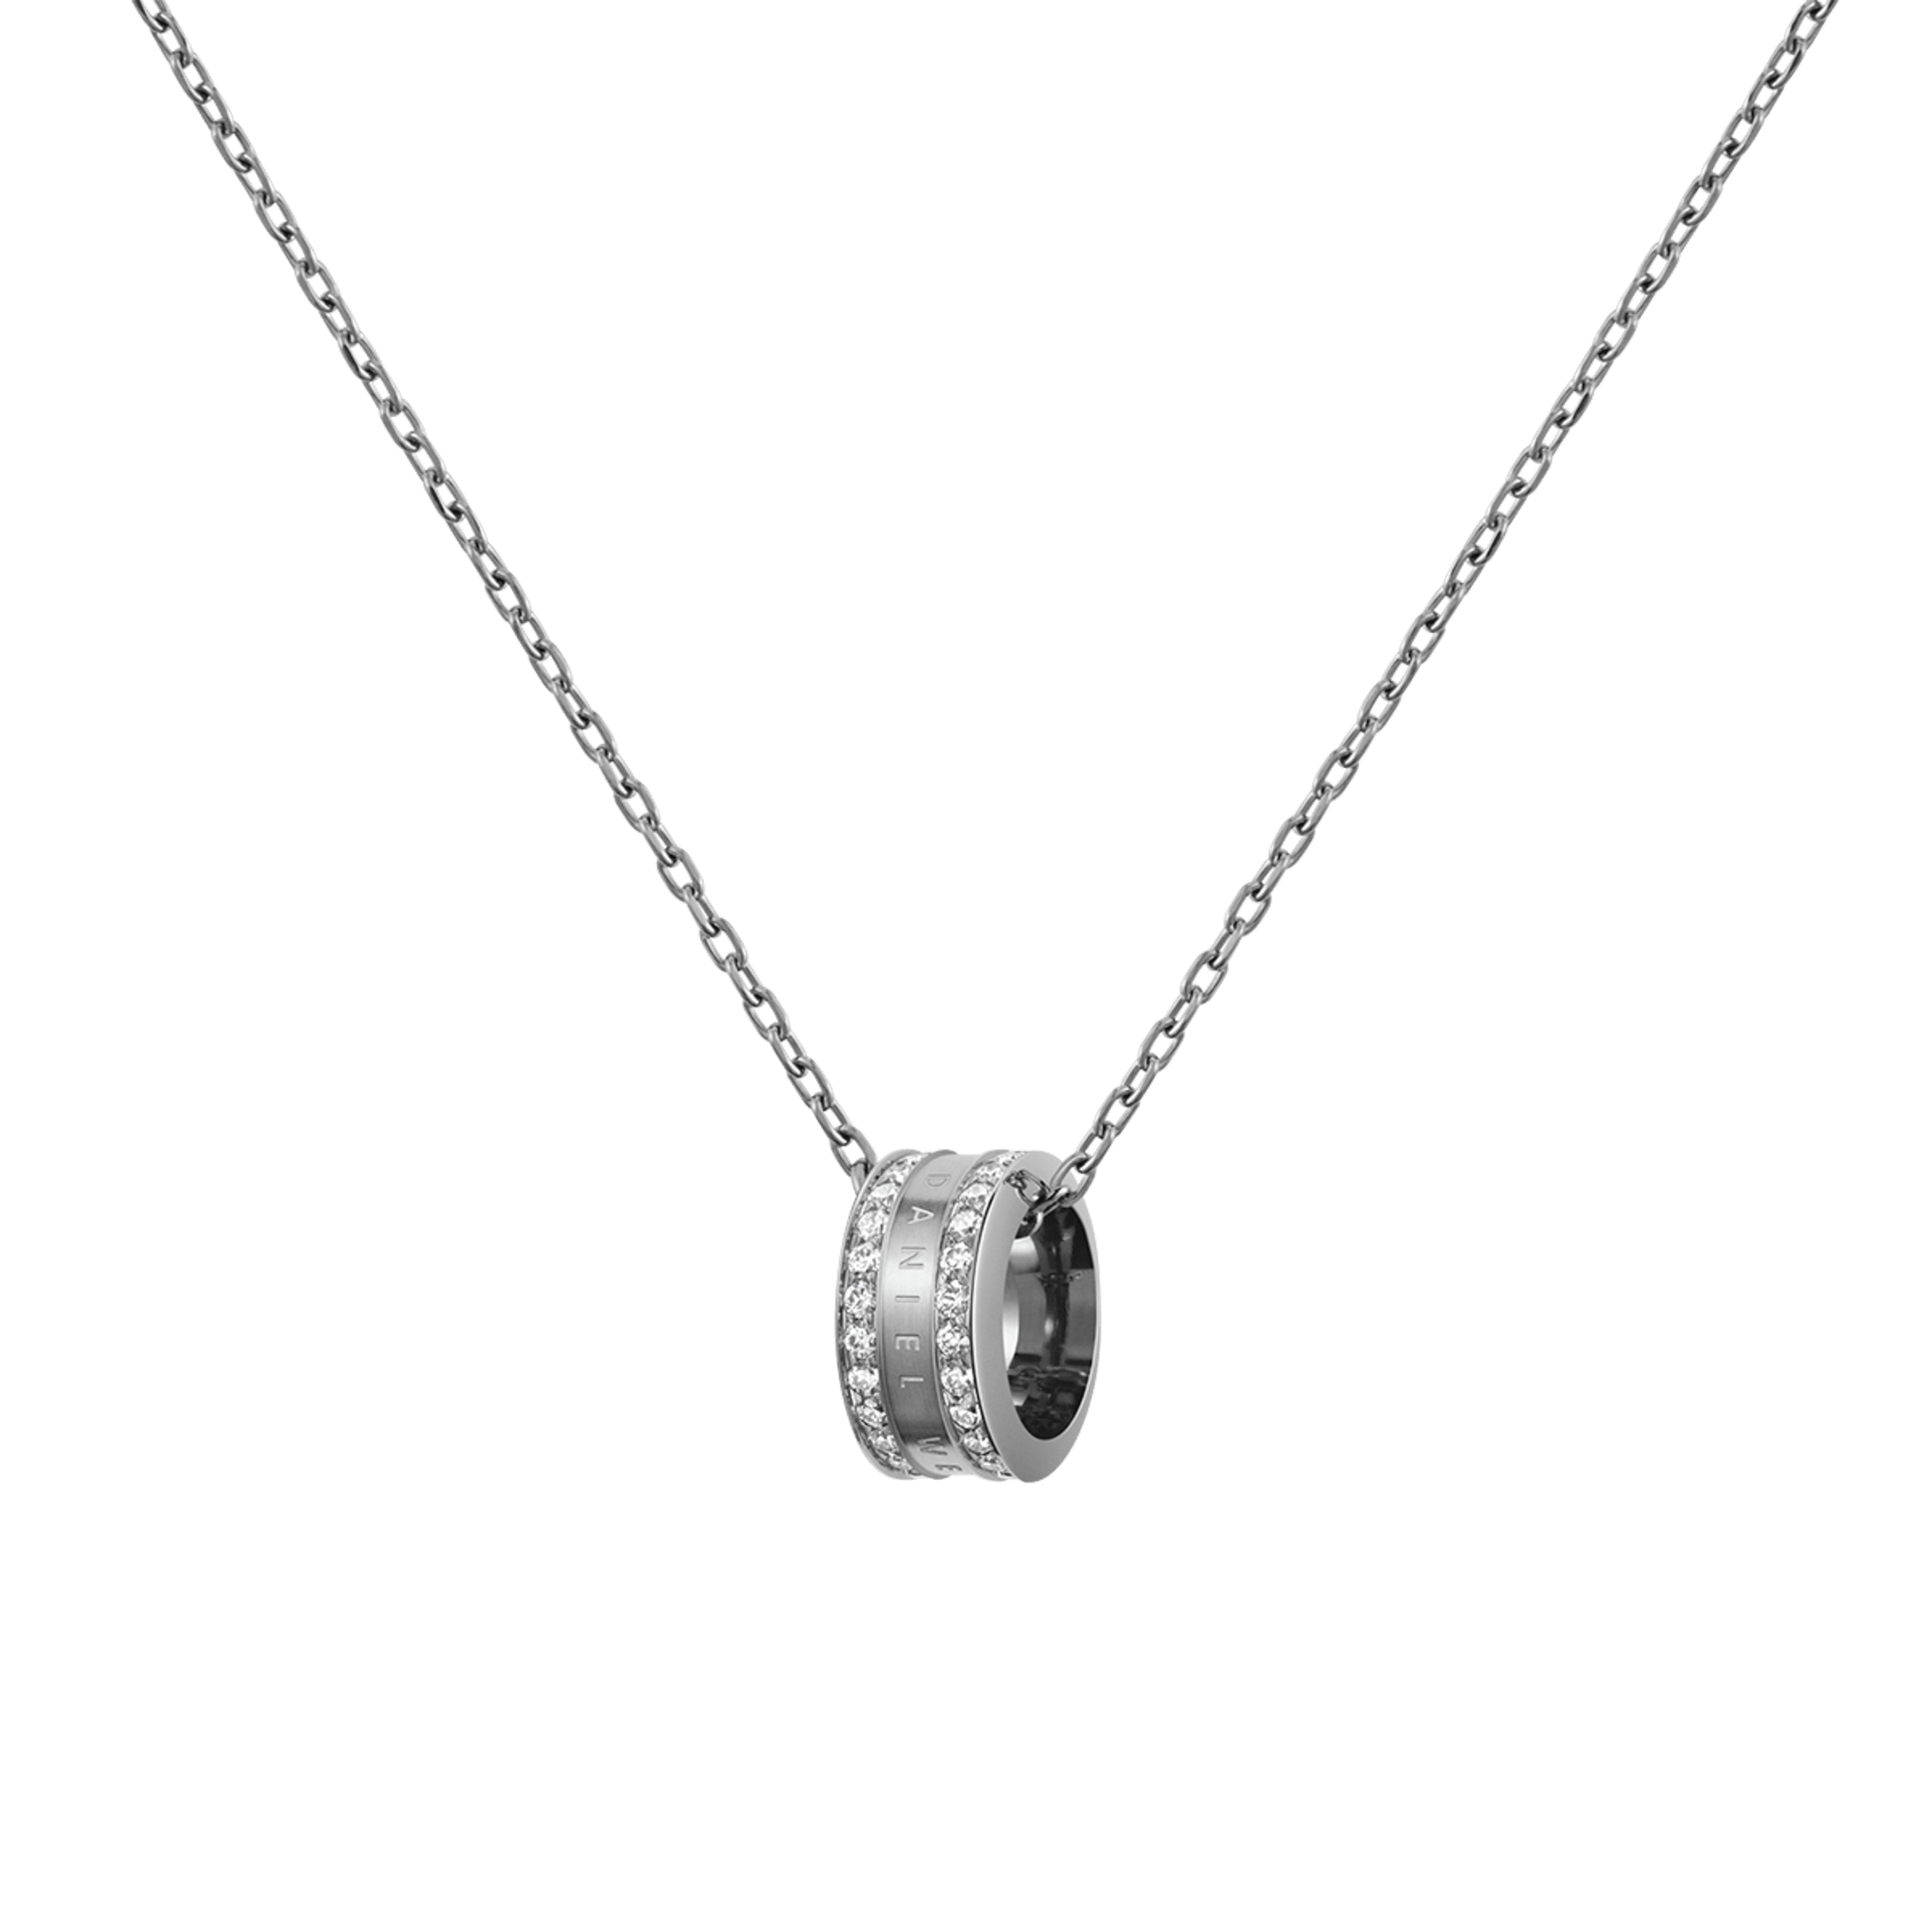 Elan Lumine Necklace Silver – Daniel Wellington